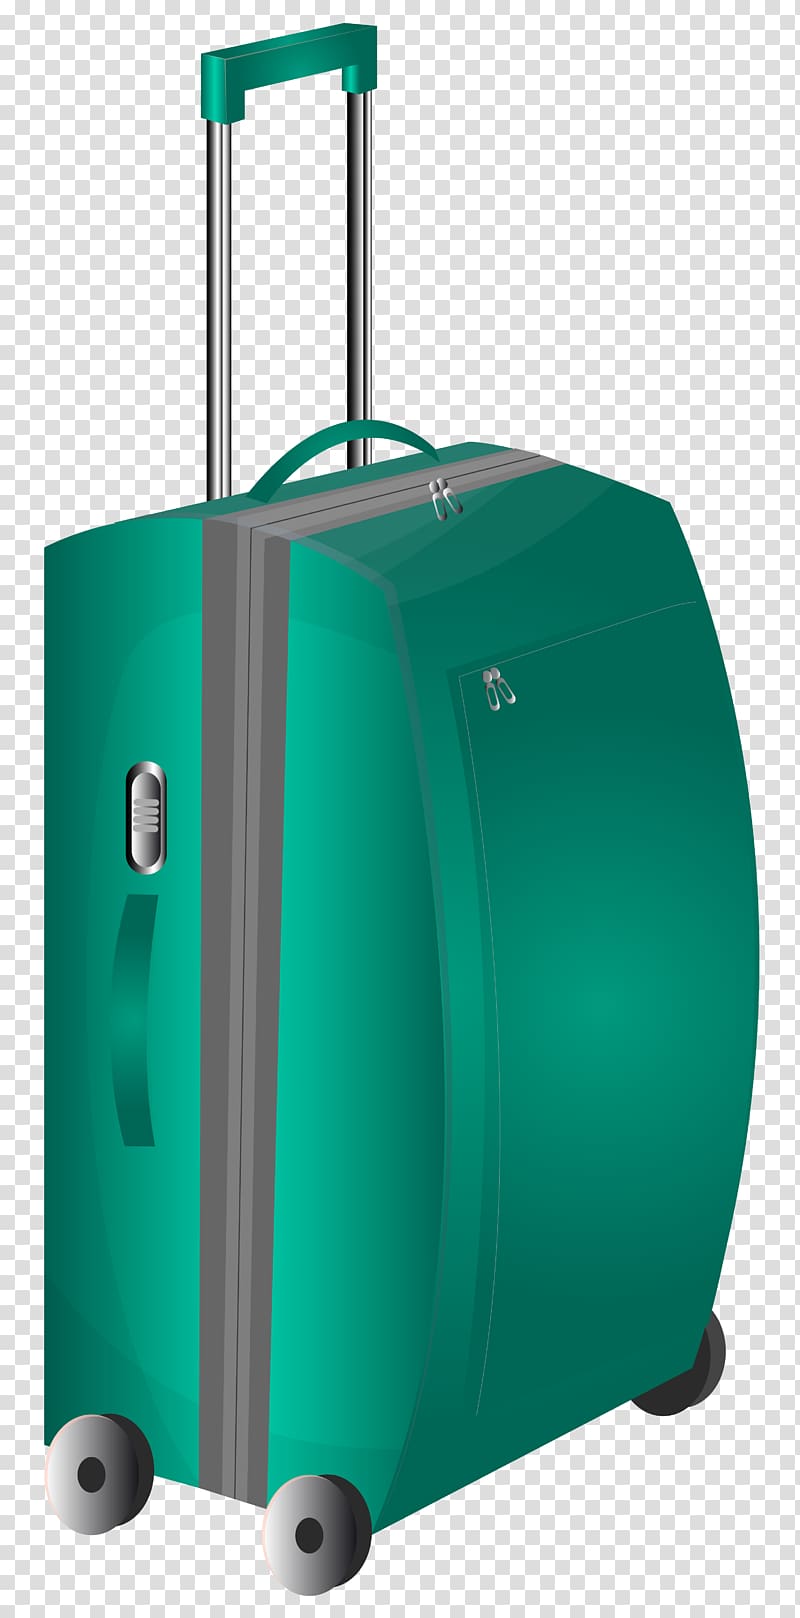 green travel luggage illustration, Suitcase Travel Bag , Green Trolley Travel Bag transparent background PNG clipart